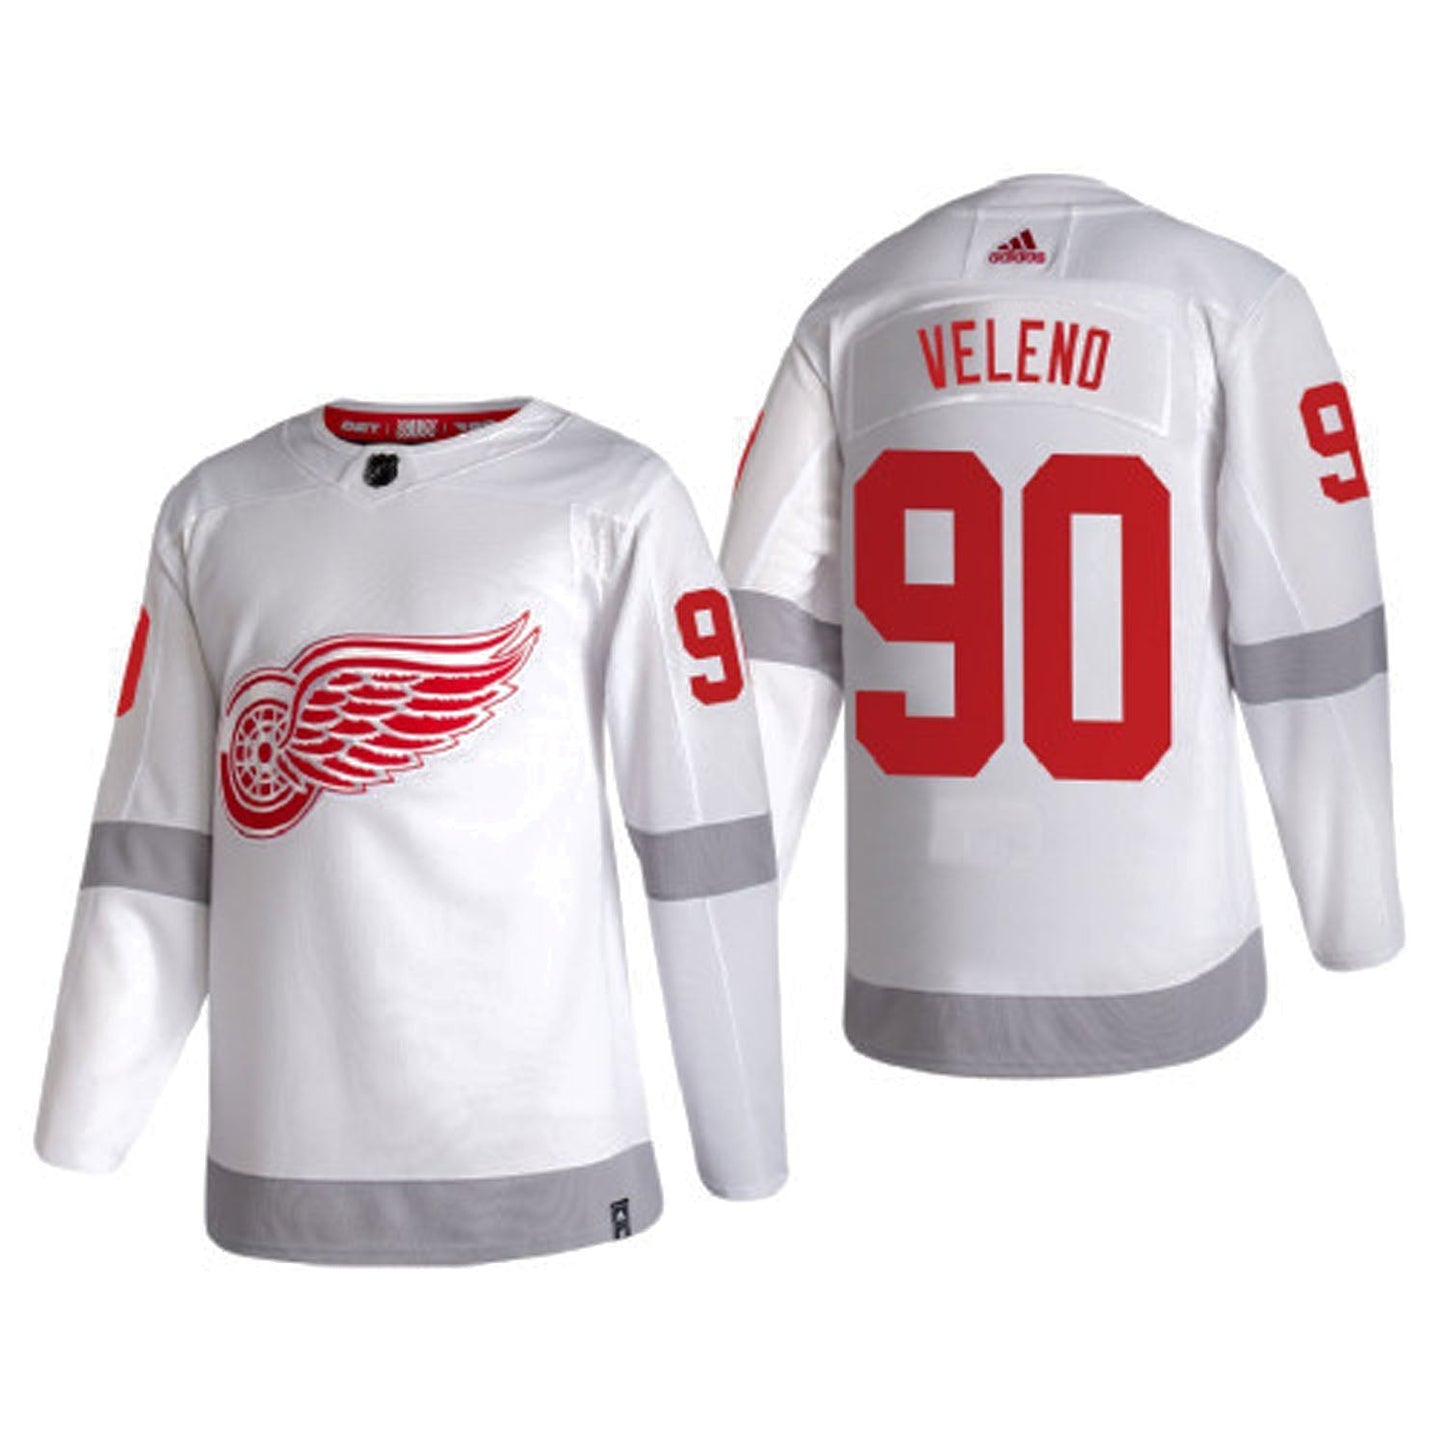 NHL Joe Veleno Detroit Red Wings 90 Jersey